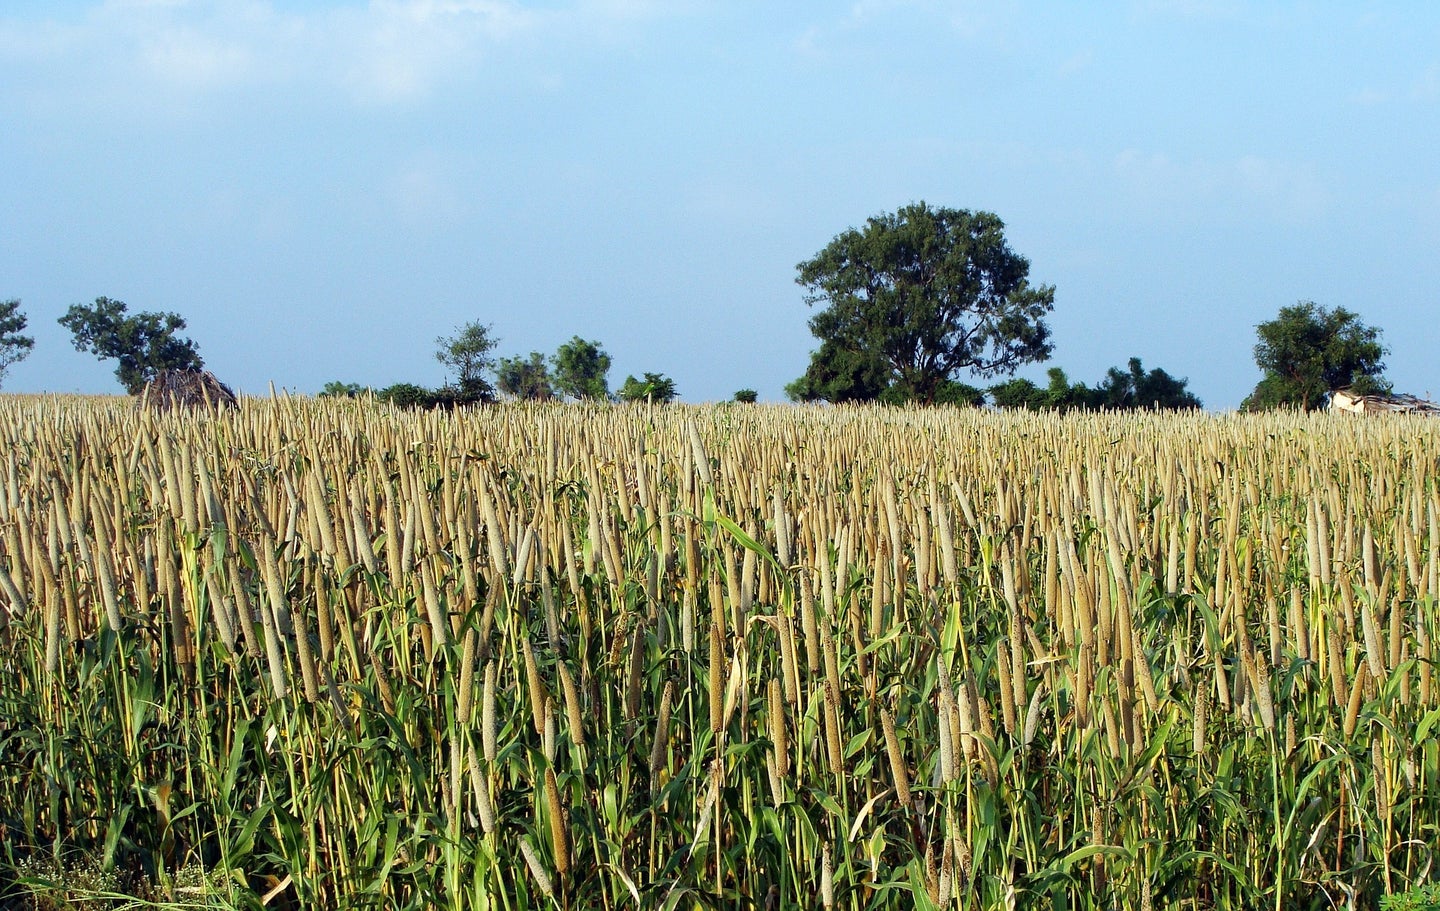 Field of pearl millet grain crops